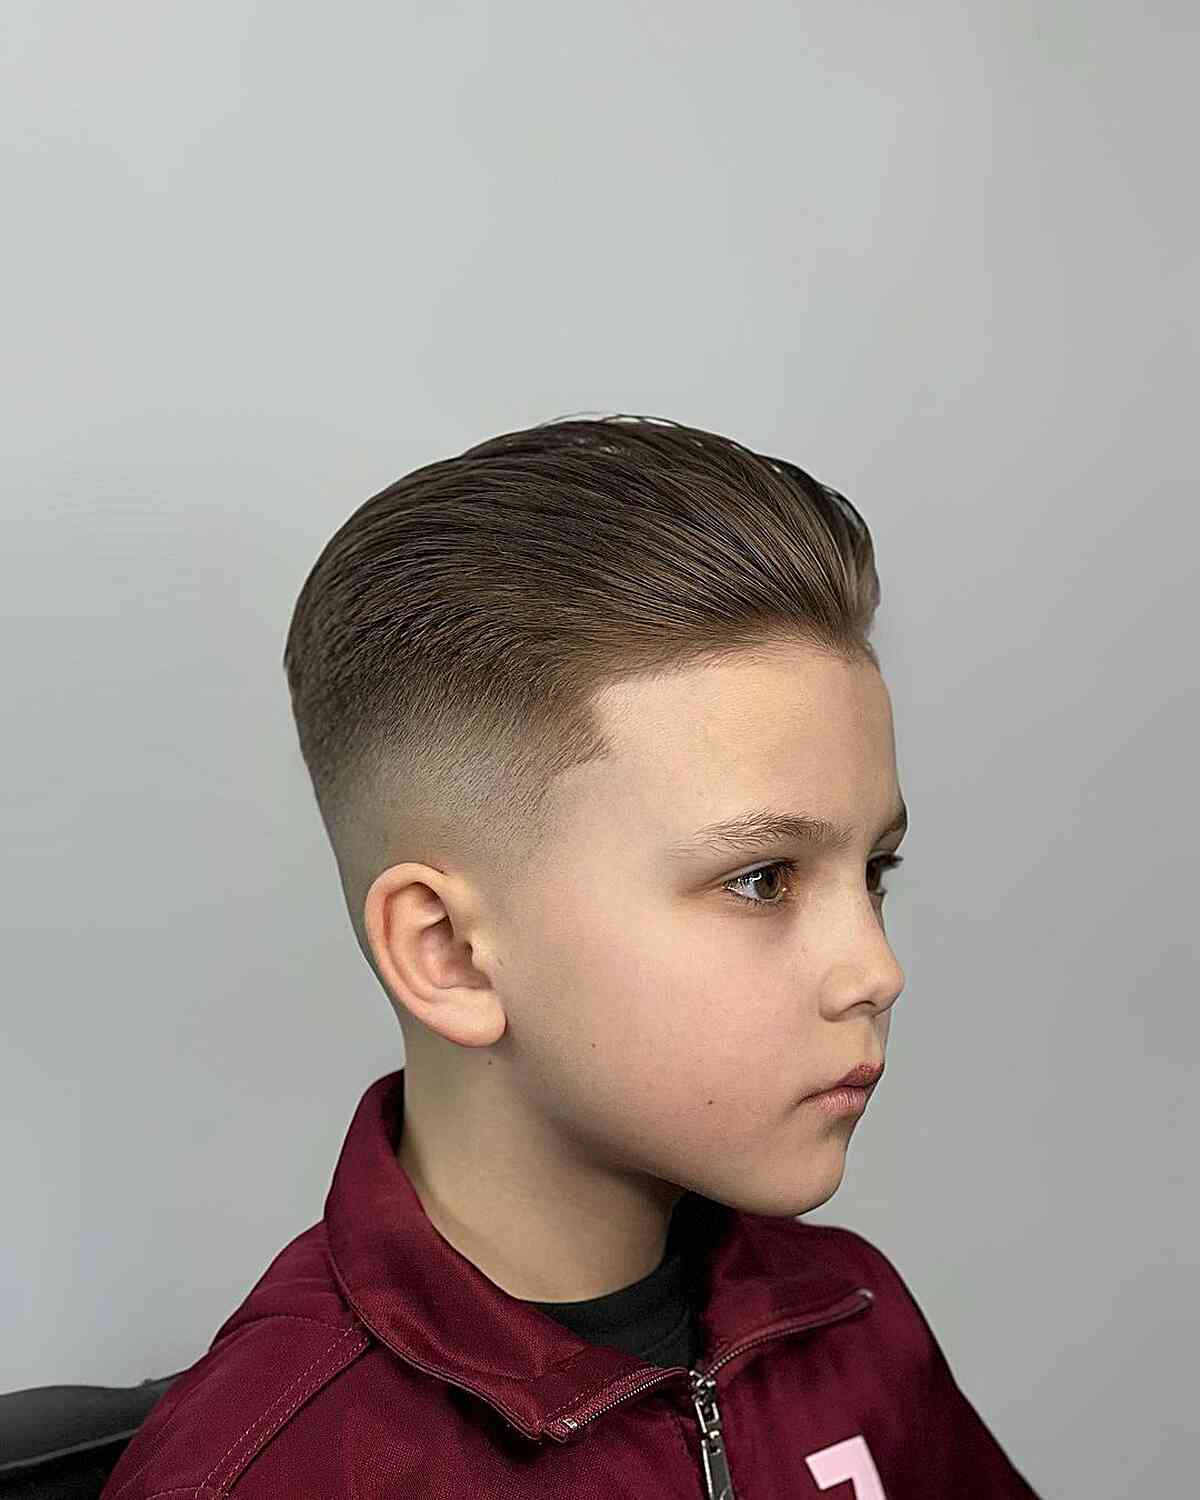 100+ Best Boys Haircut 2023 - Mr. Kids Haircuts 2023